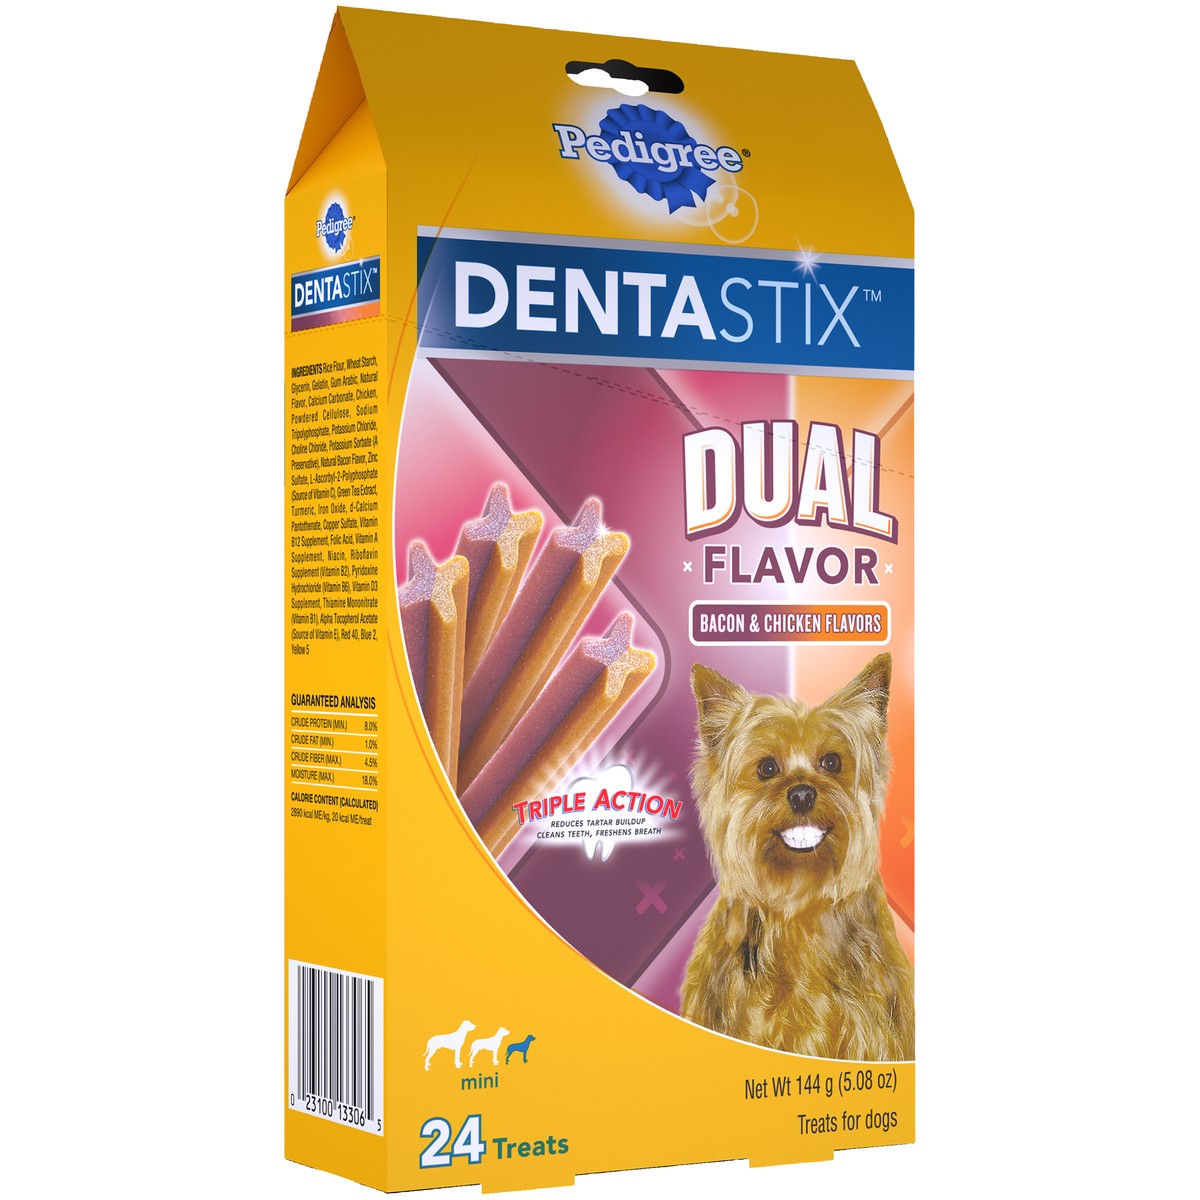 slide 6 of 14, Pedigree Dentastix Dual Flavor Bacon & Chicken Flavors Mini Treats for Dogs 5.08 oz. Box, 5.08 oz